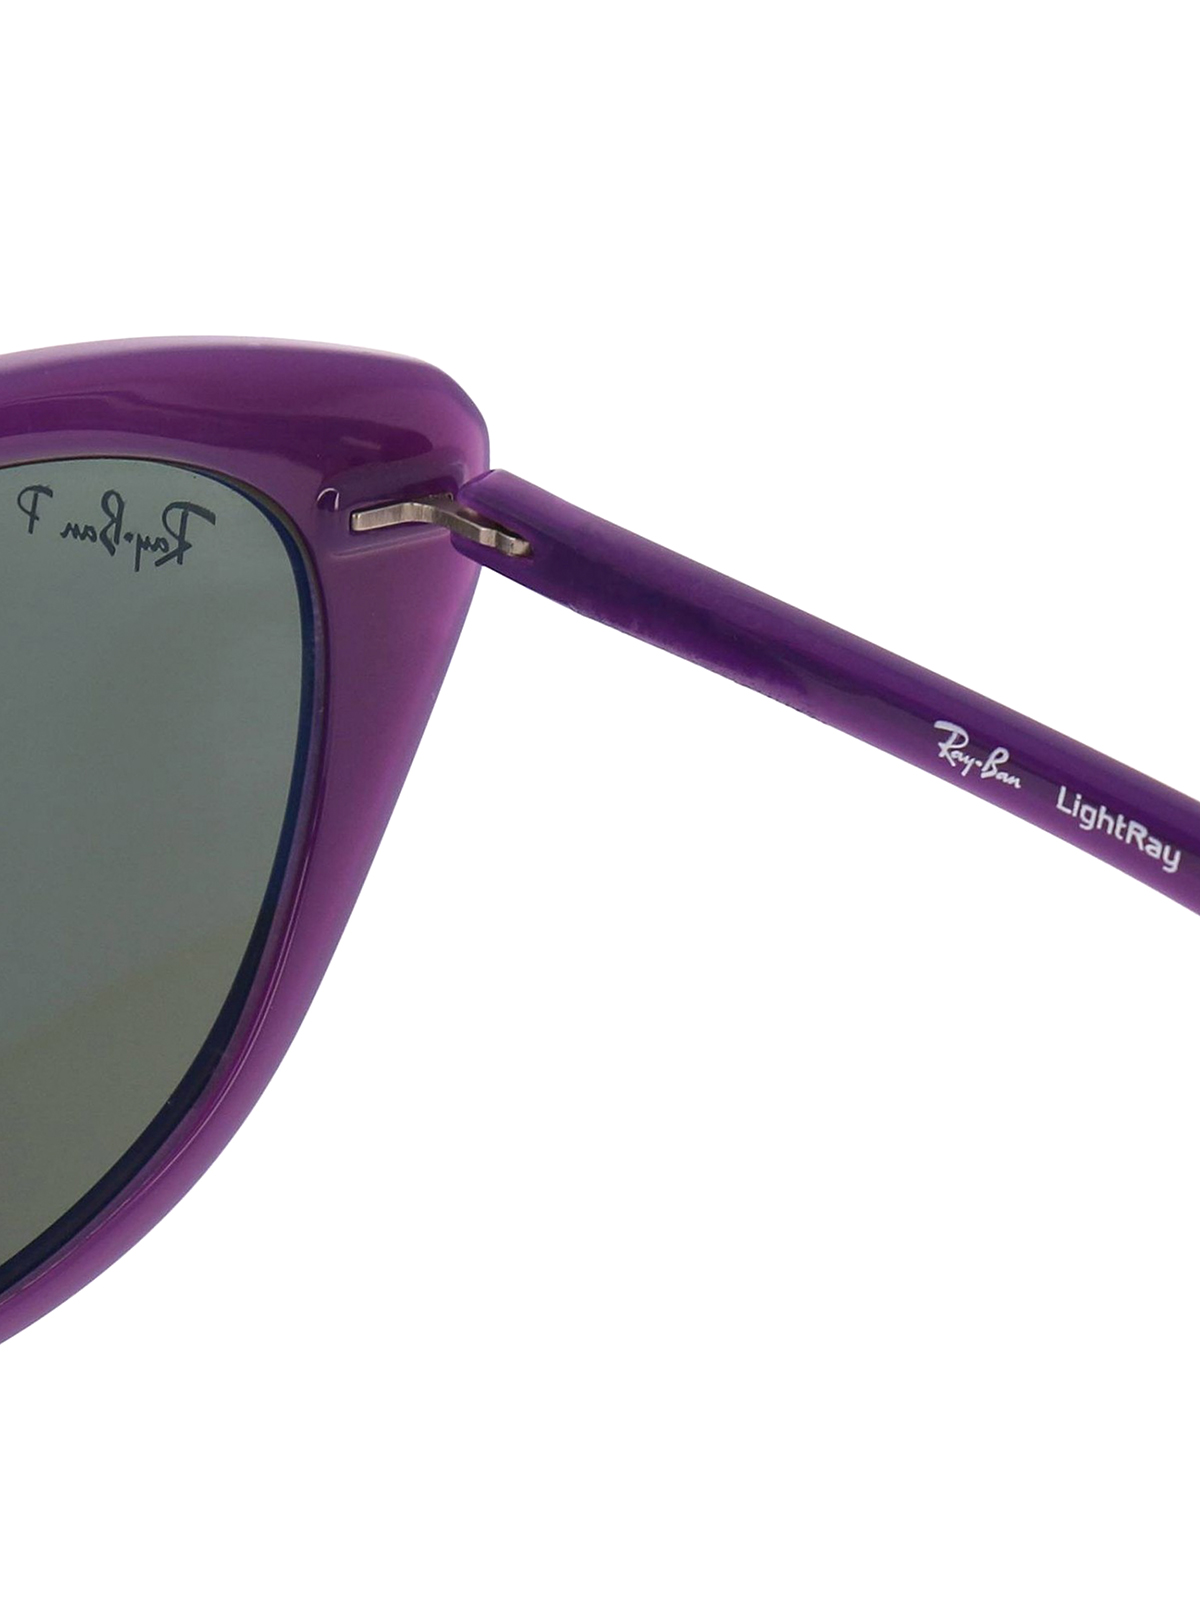 purple ray bans sunglasses